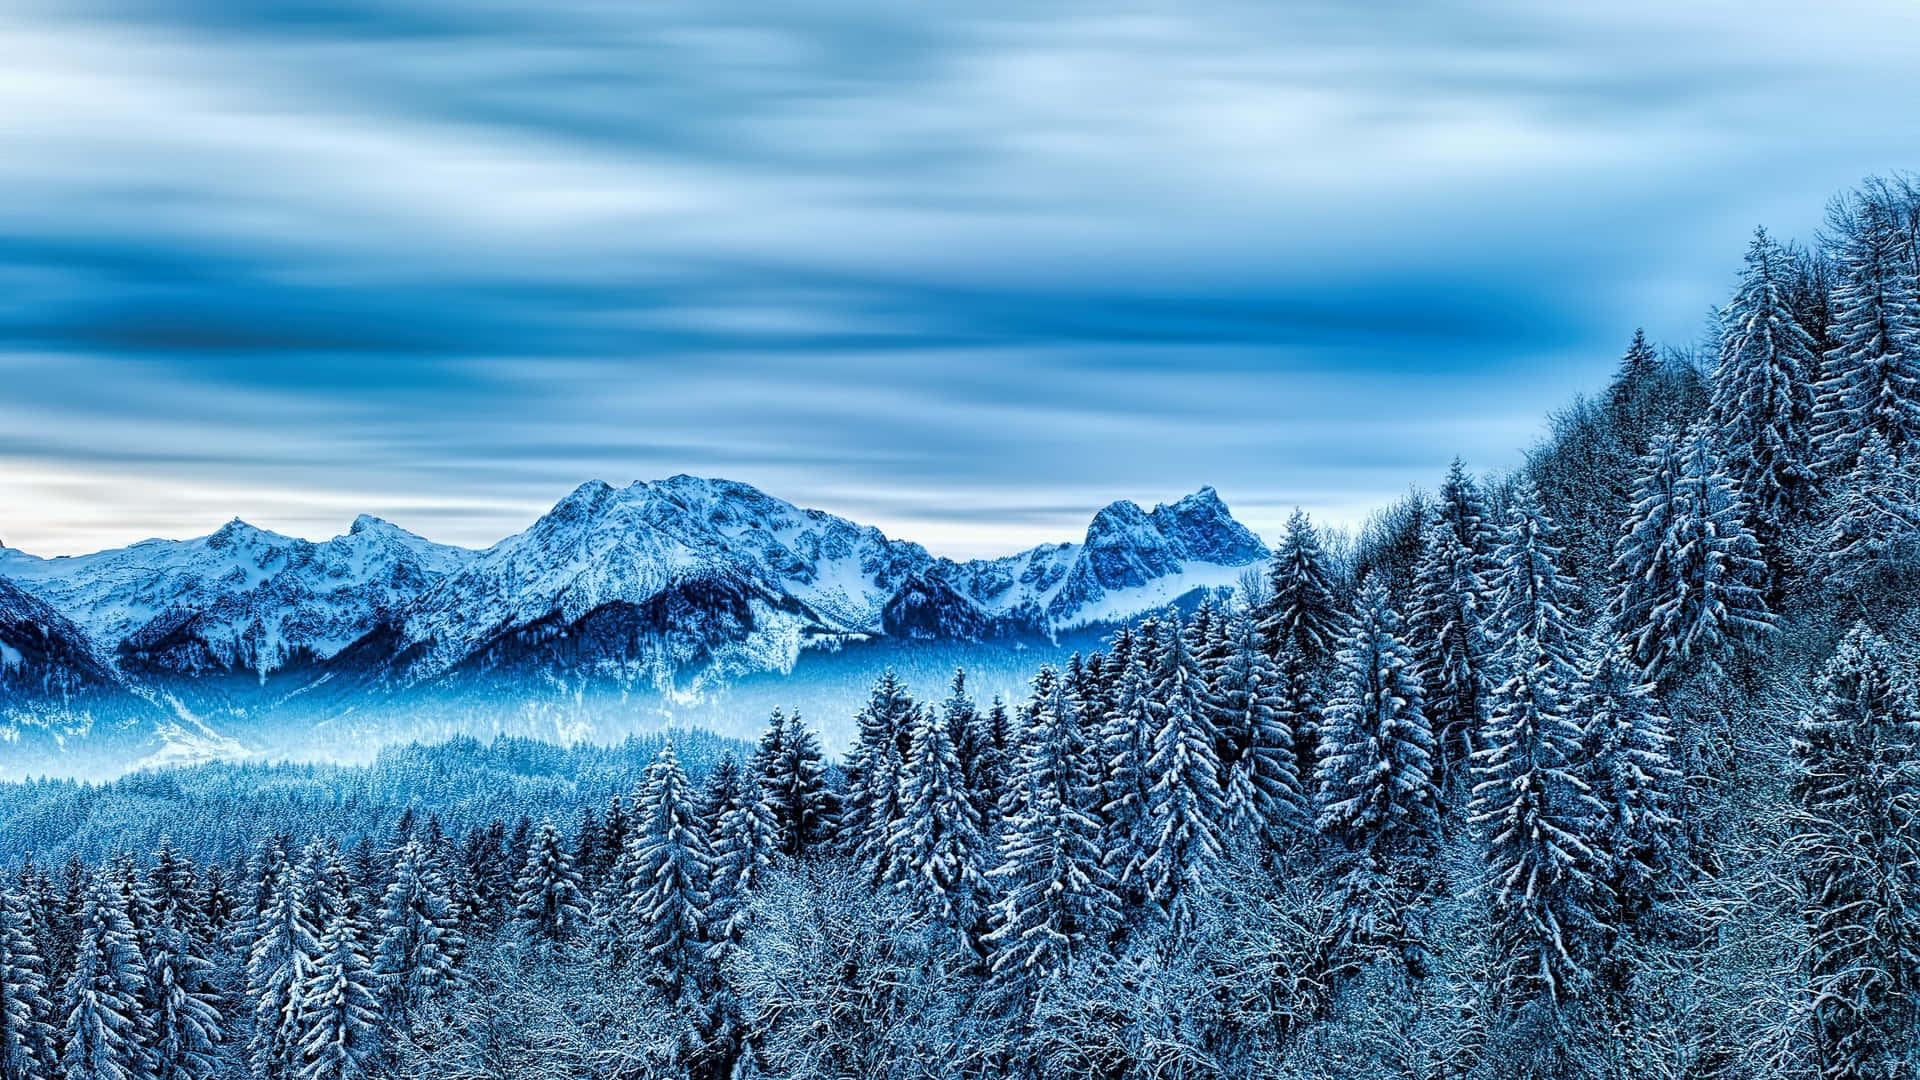 Winter Mountain Range For Laptop Wallpaper